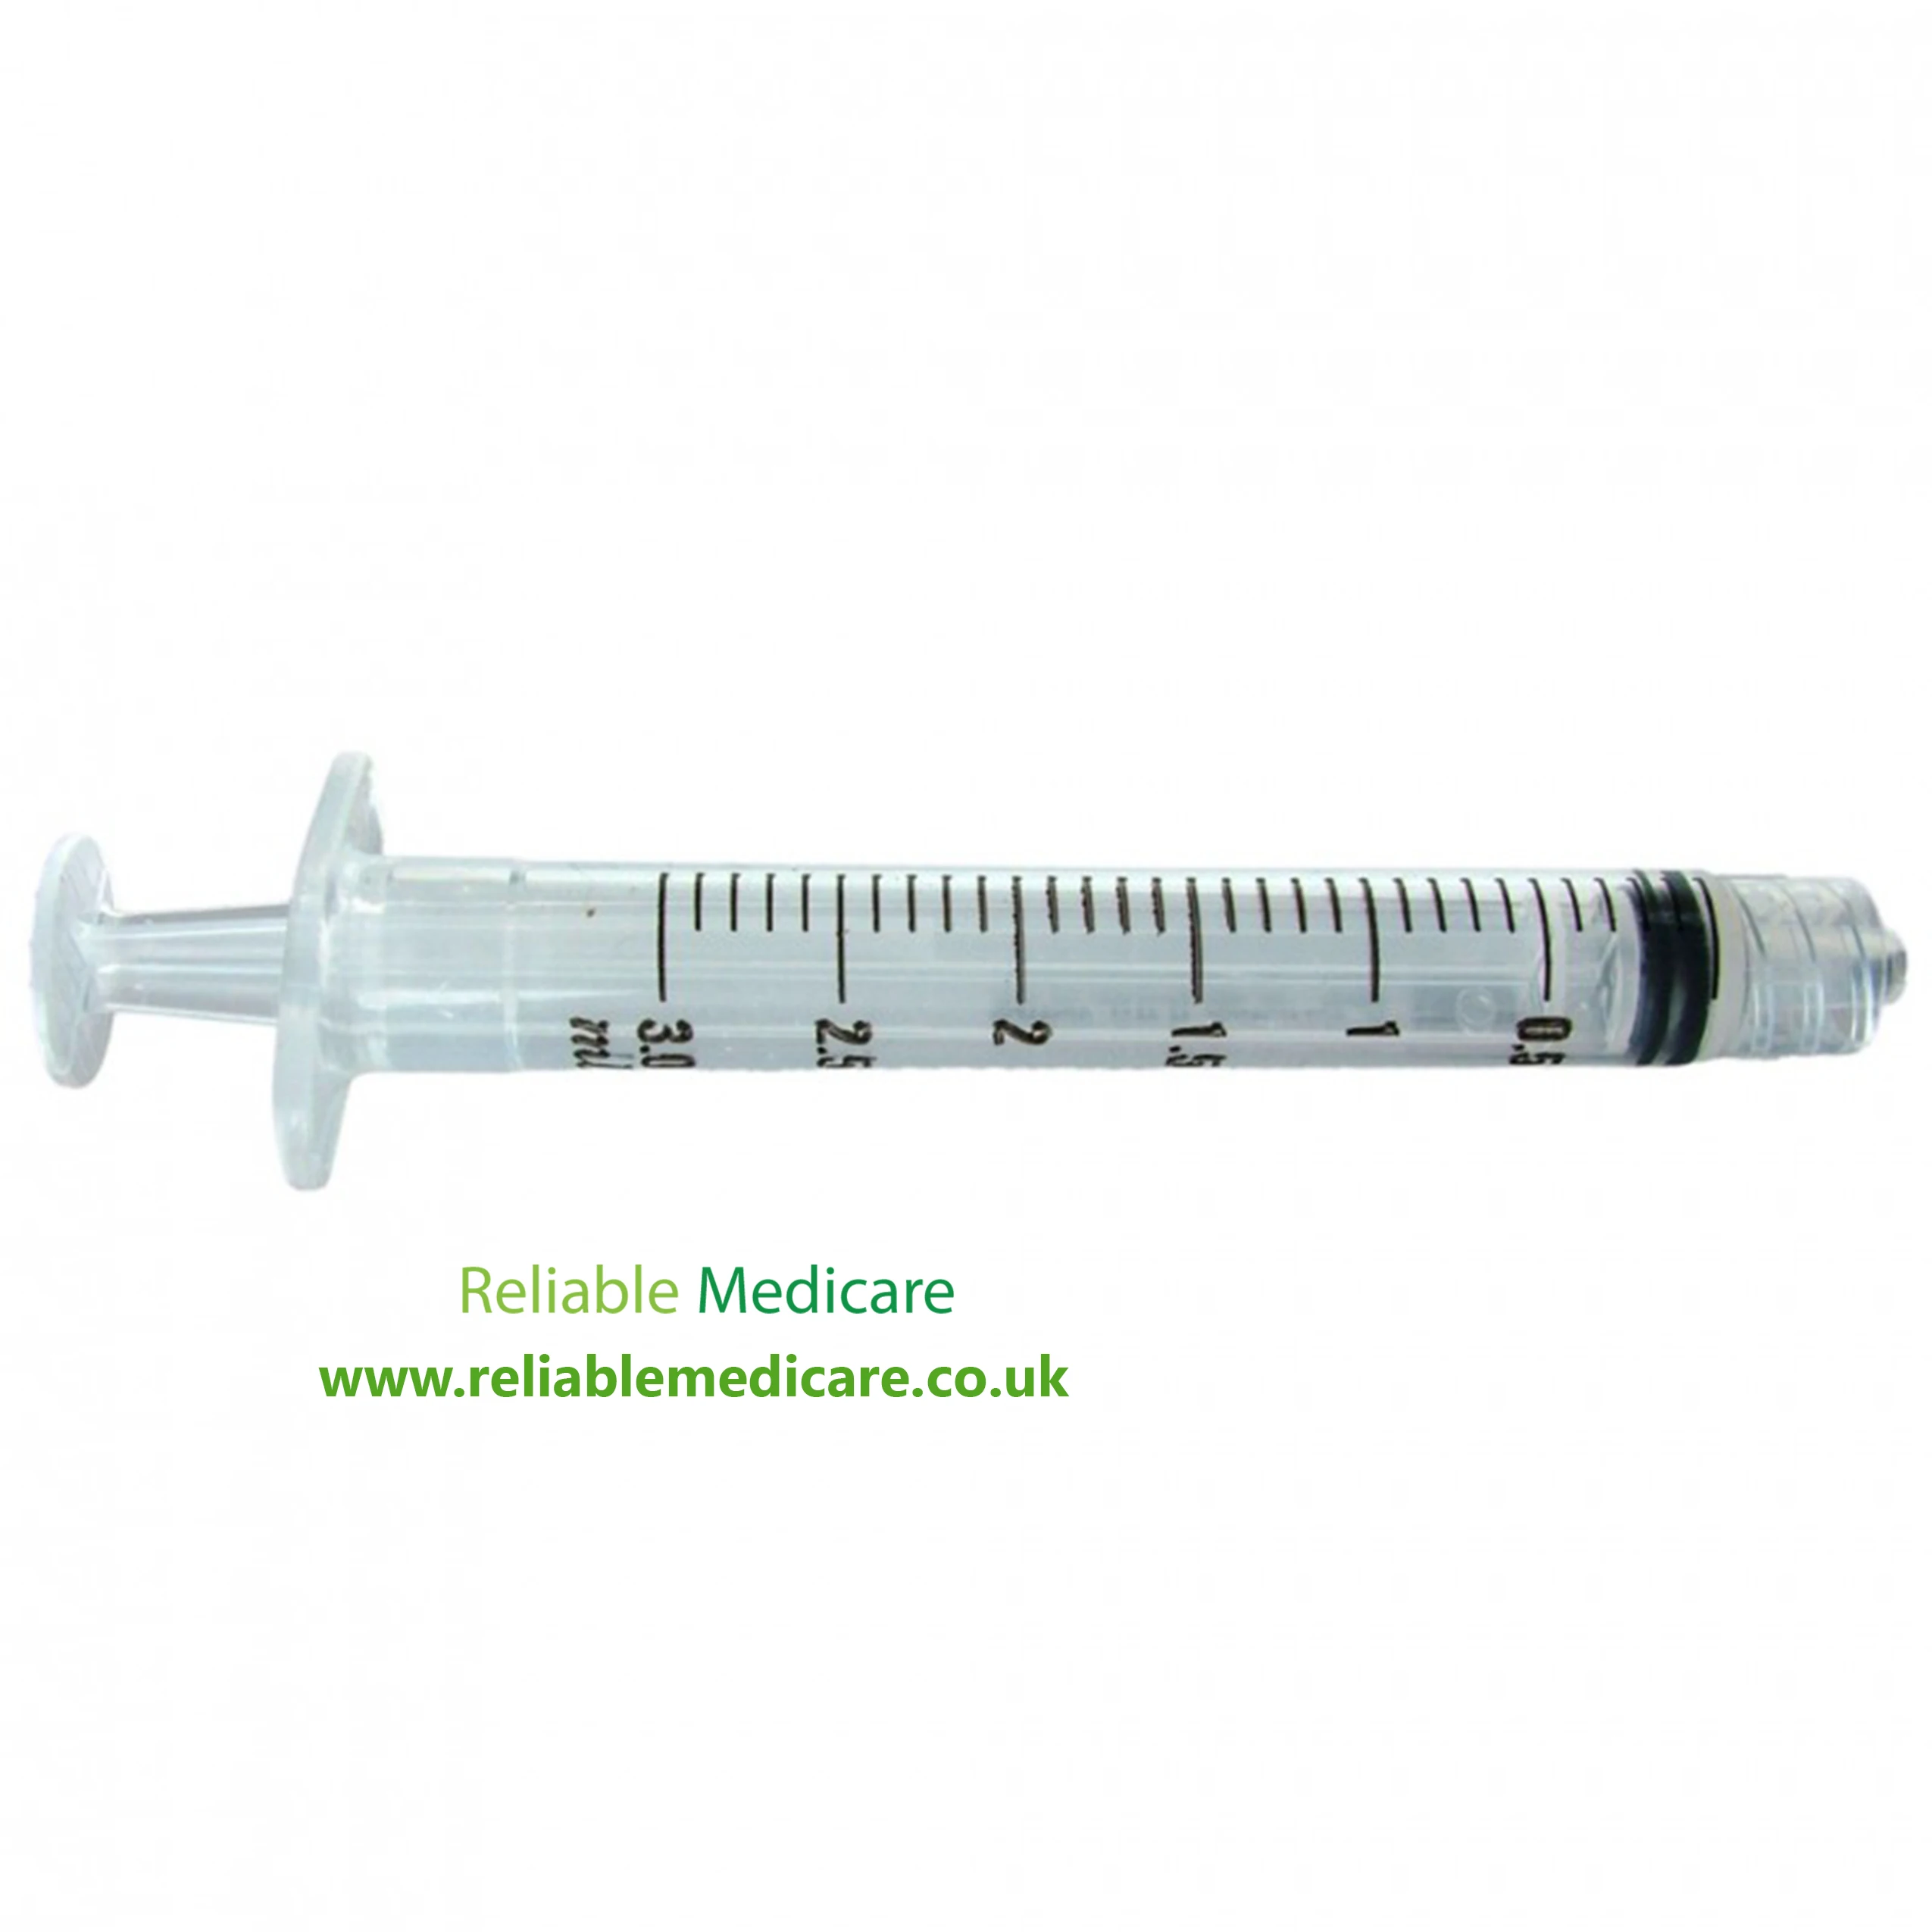 Luer Lok Syringes 3ml Plastipak Buy Syringes Insulin Product On Alibaba Com